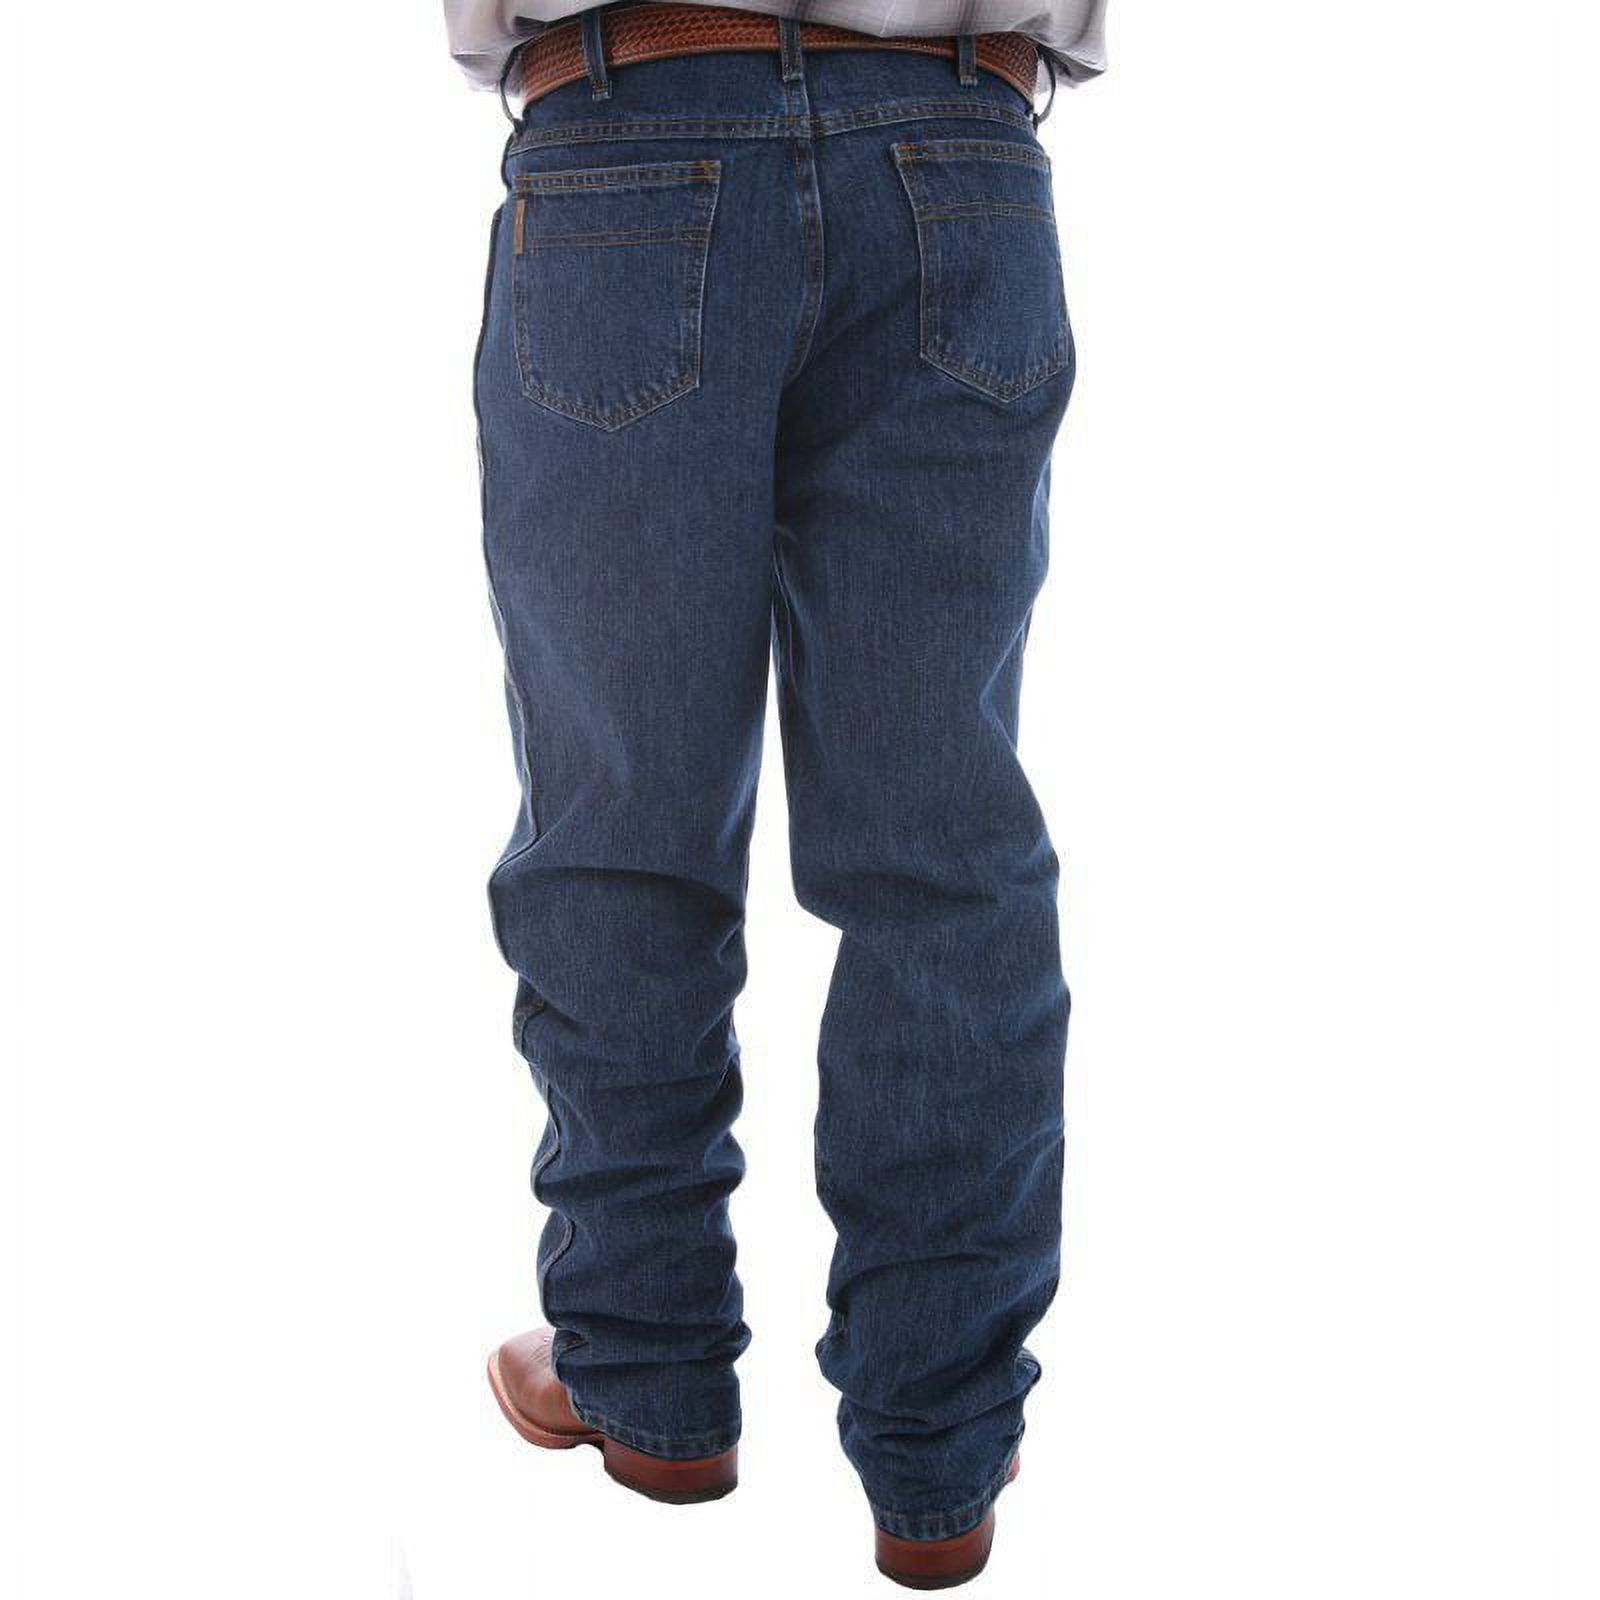 Cinch Apparel Mens Green Label Original Fit Jeans 29W x 38L Dark Stonewash - image 1 of 4